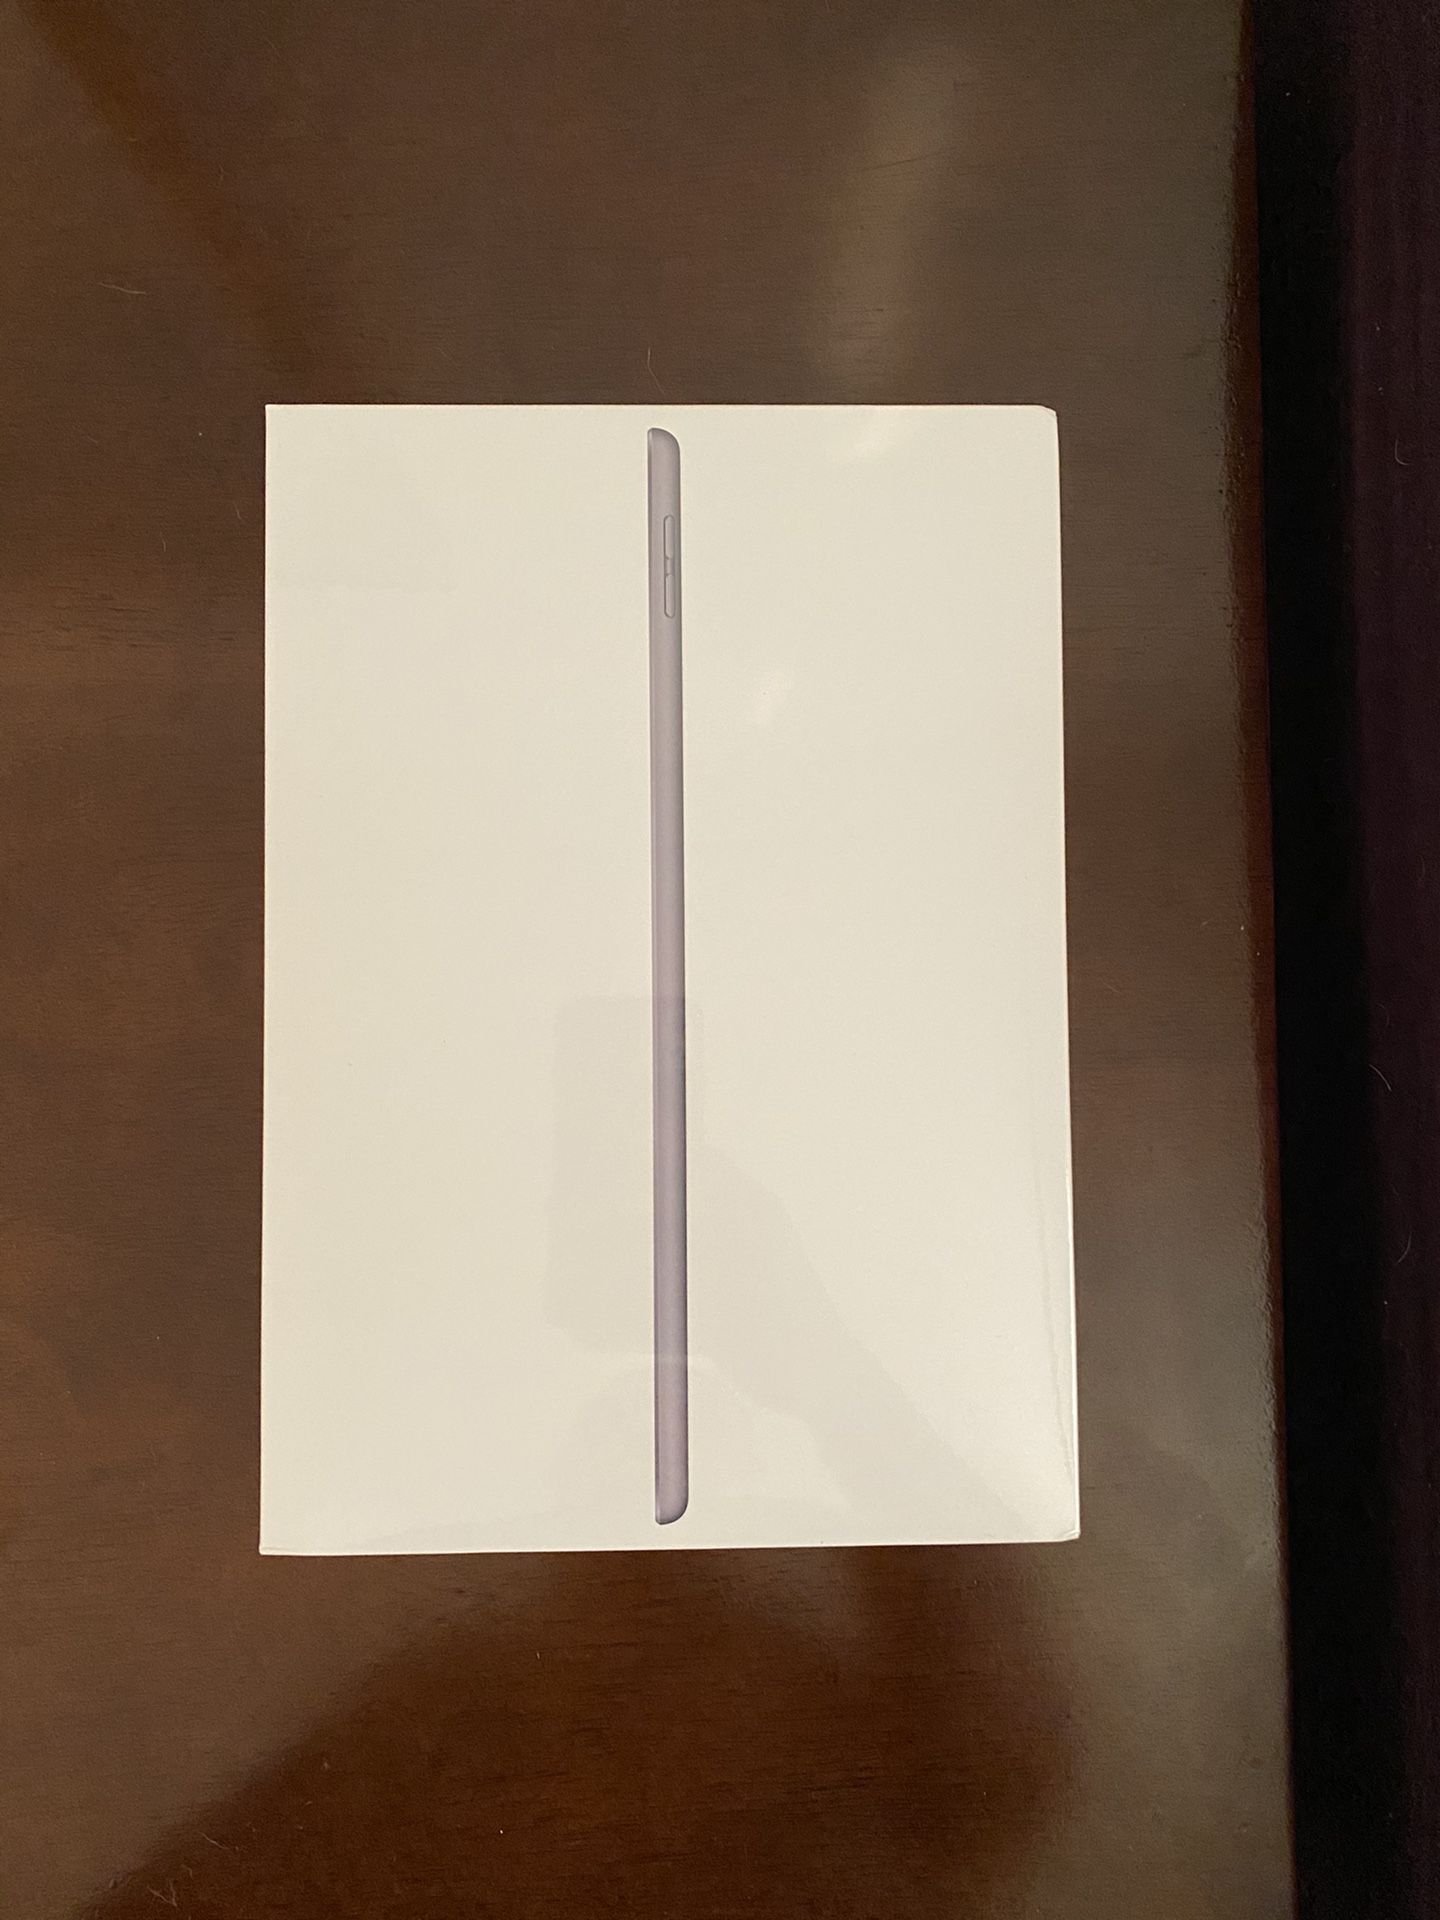 Apple iPad 128GB 7th Generation (10.2-inch, Wi-Fi, 128GB) - Space Gray